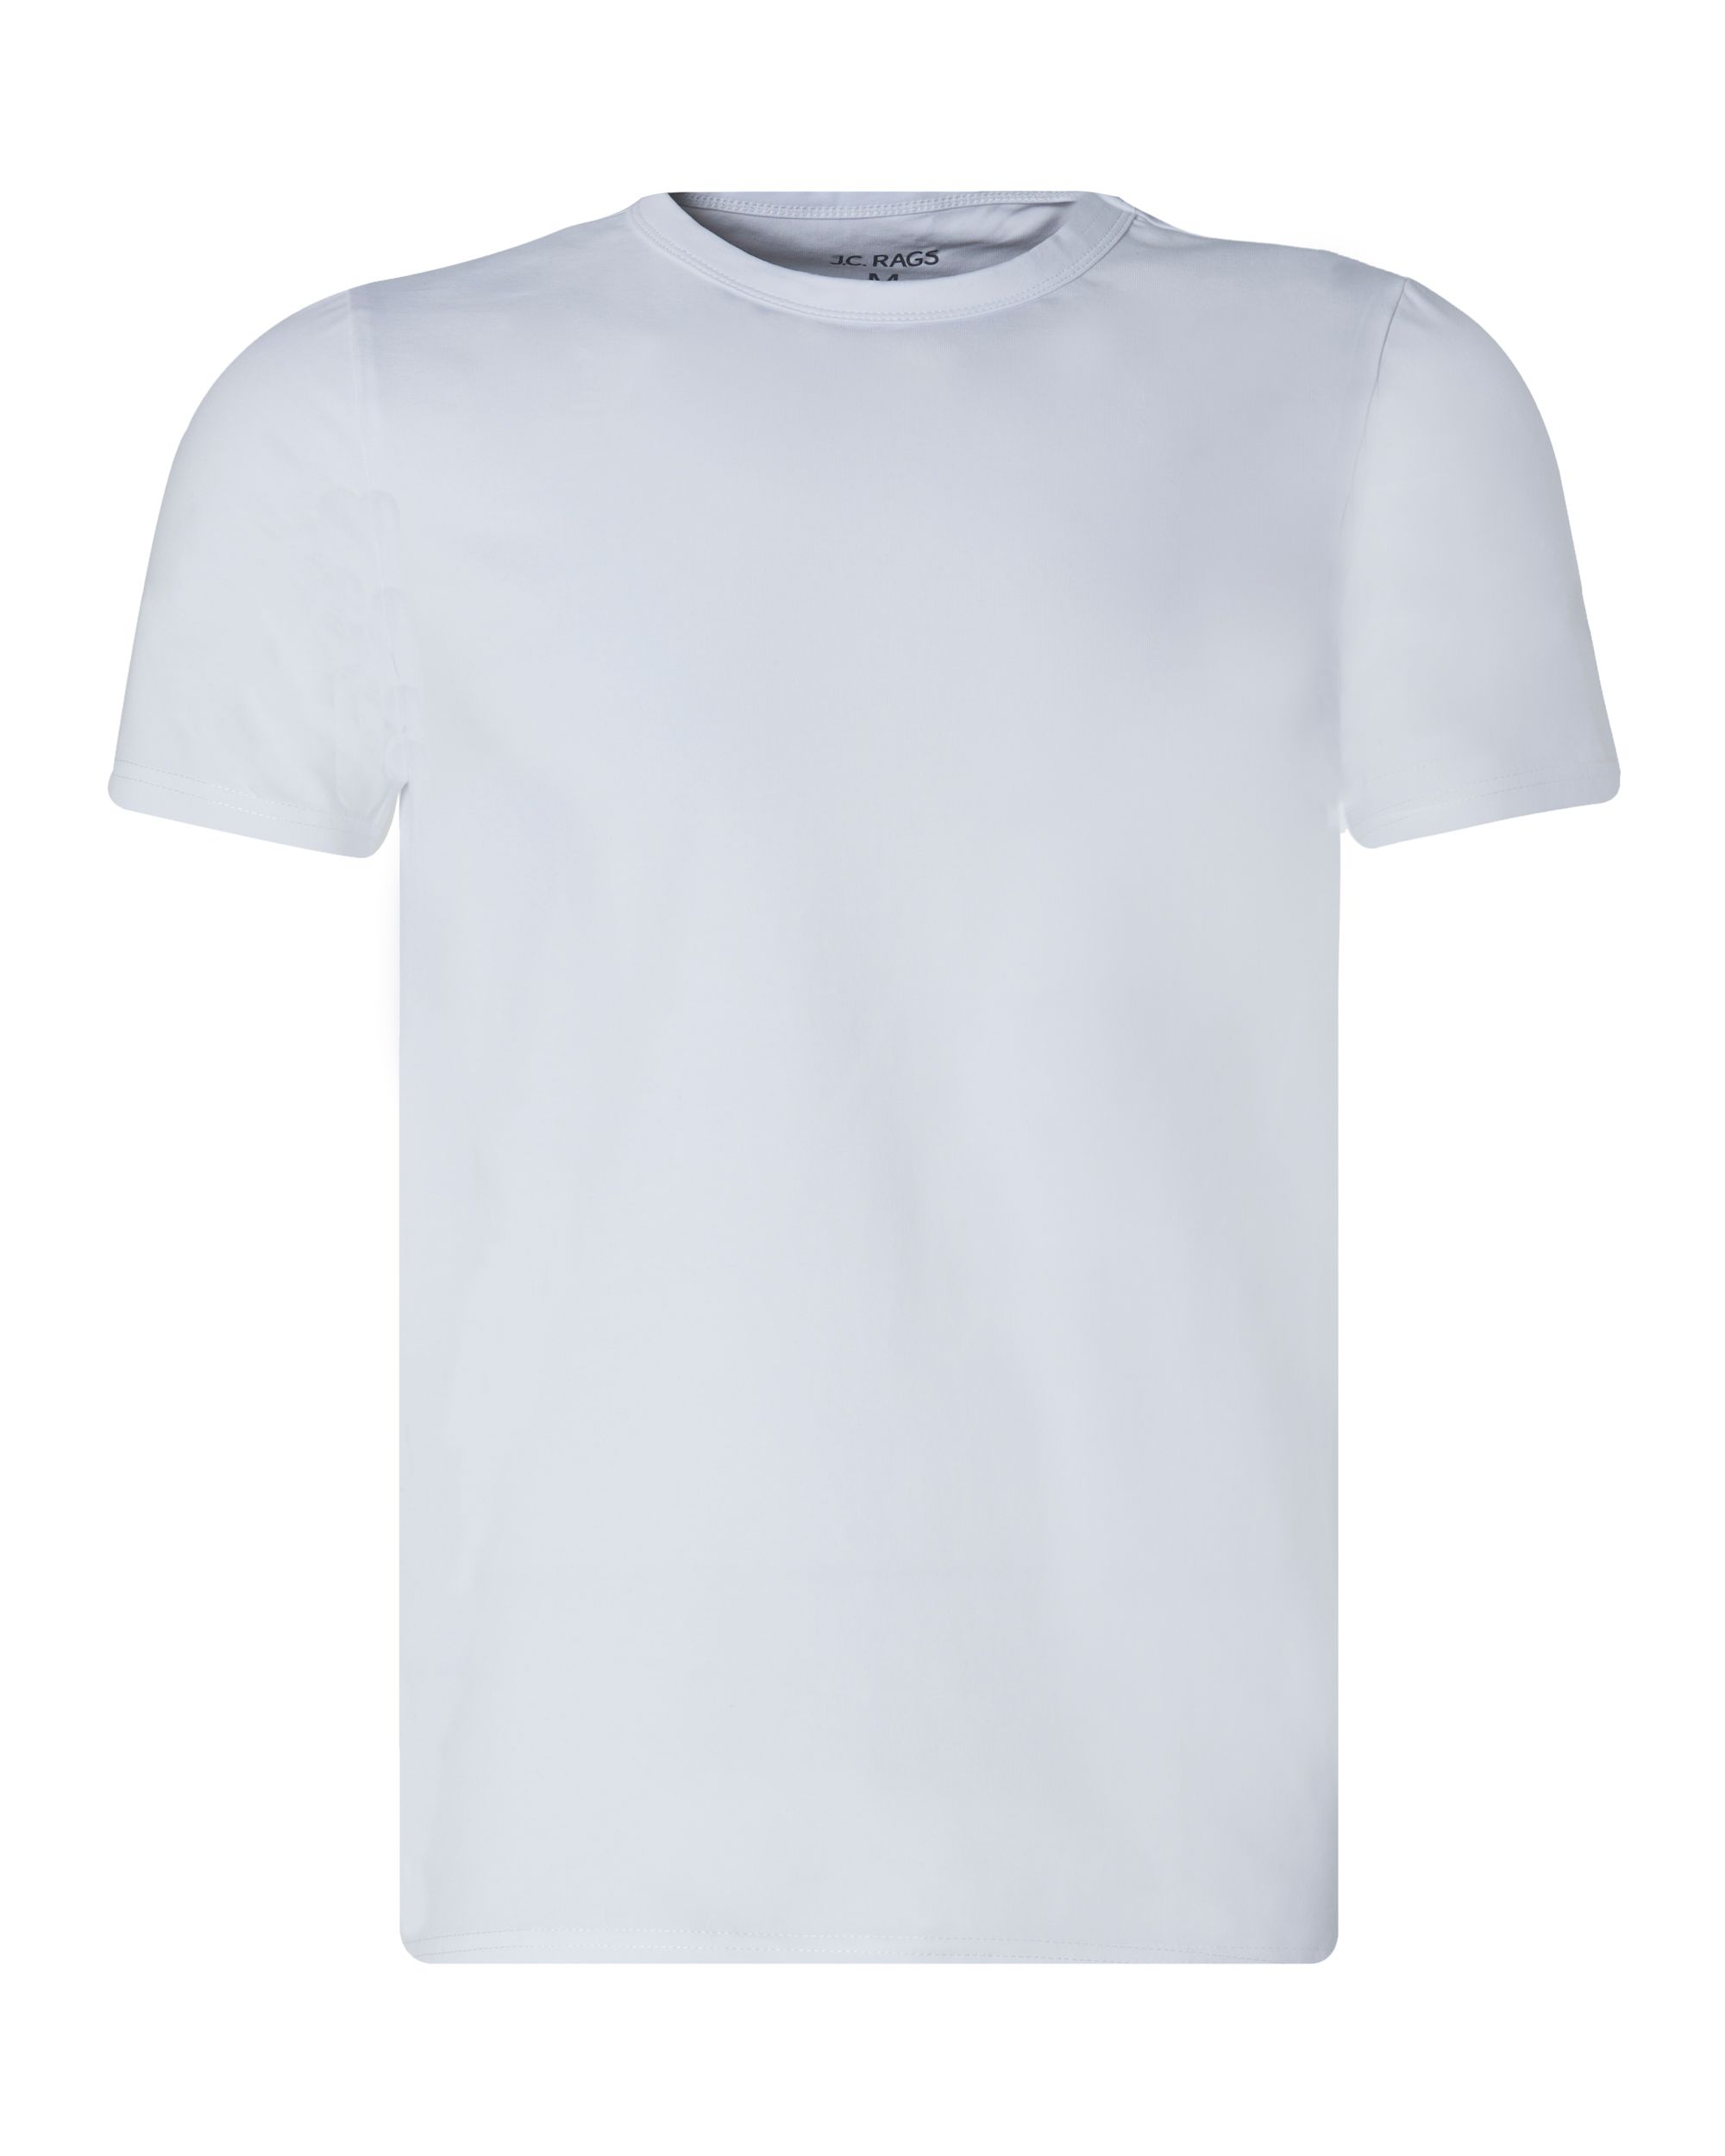 J.C. RAGS Basic T-shirt KM 2-pack WHITE 081603-002-L